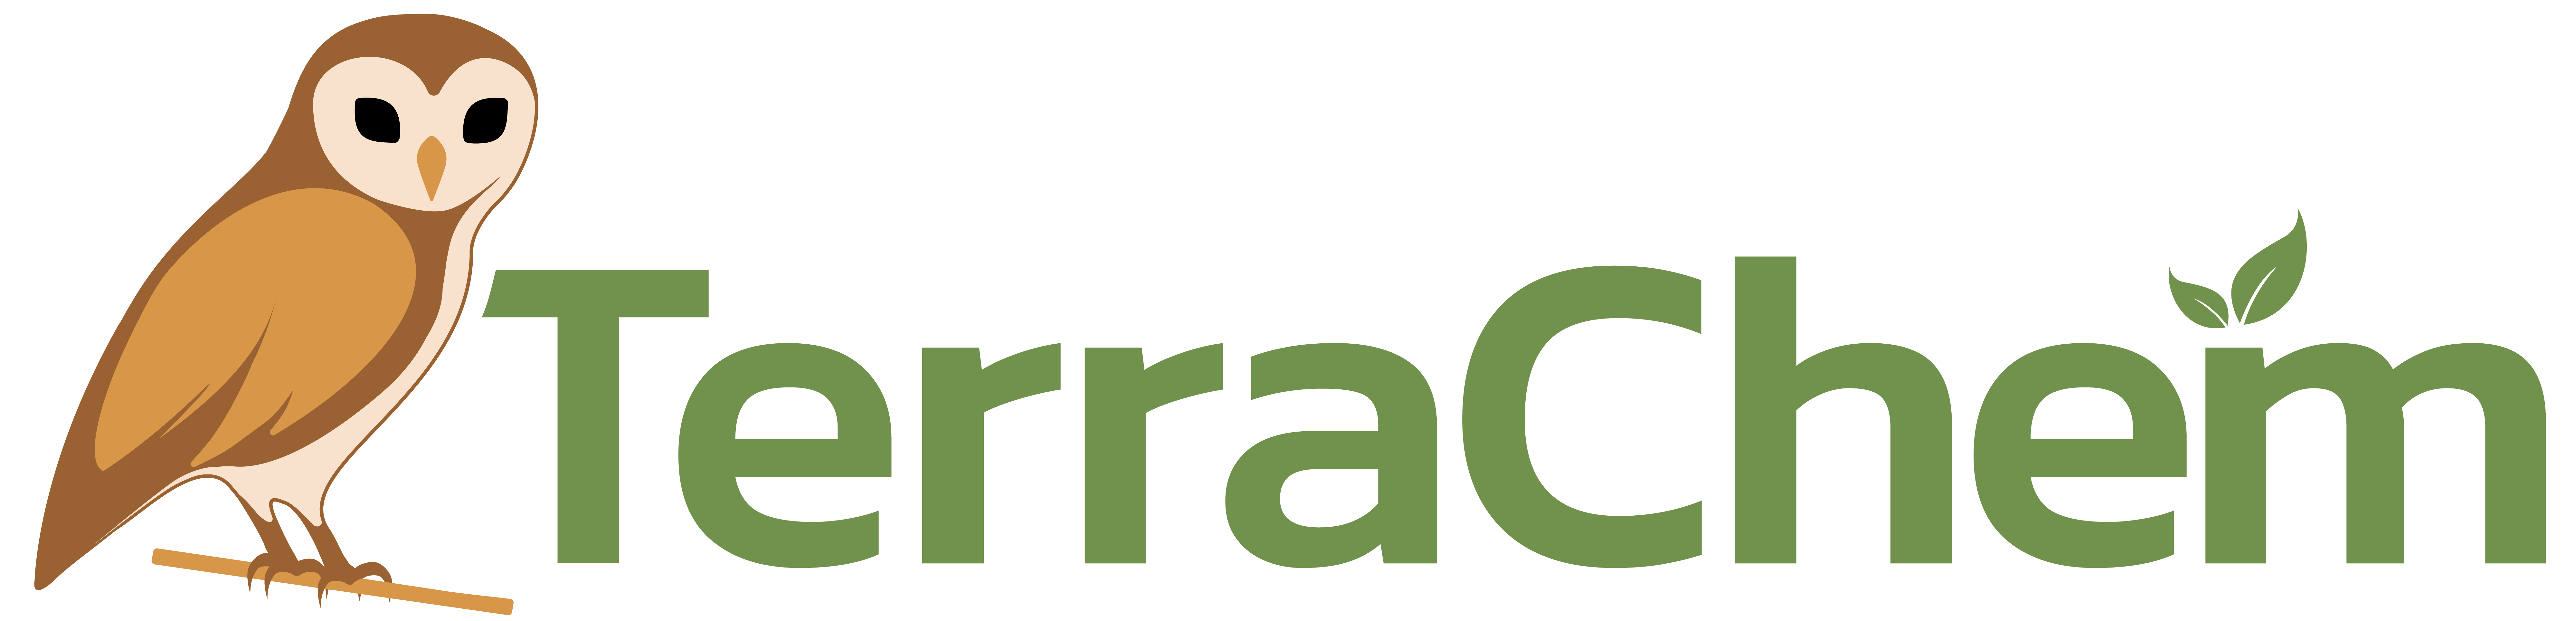 TerraChem logo